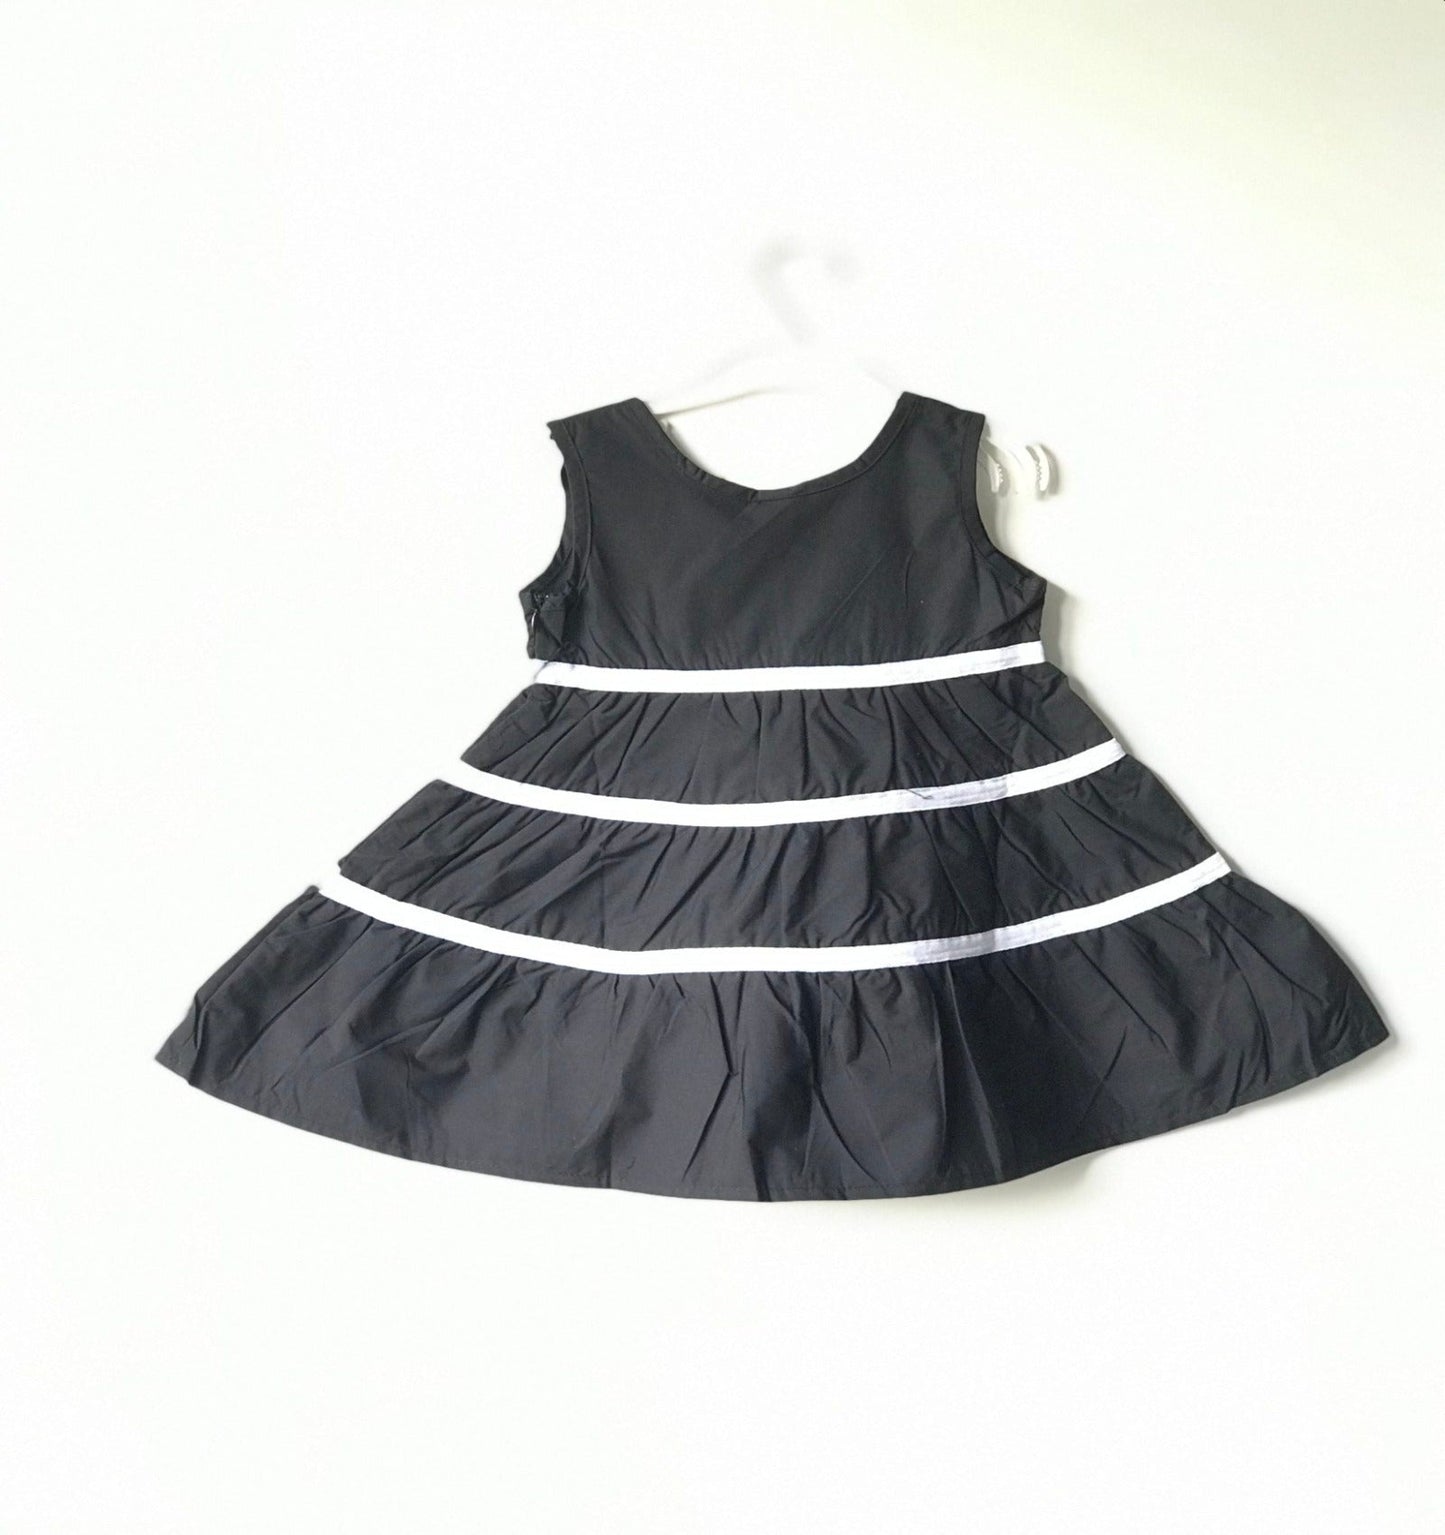 Black Dress Stripes Cotton Party 2-6 Years